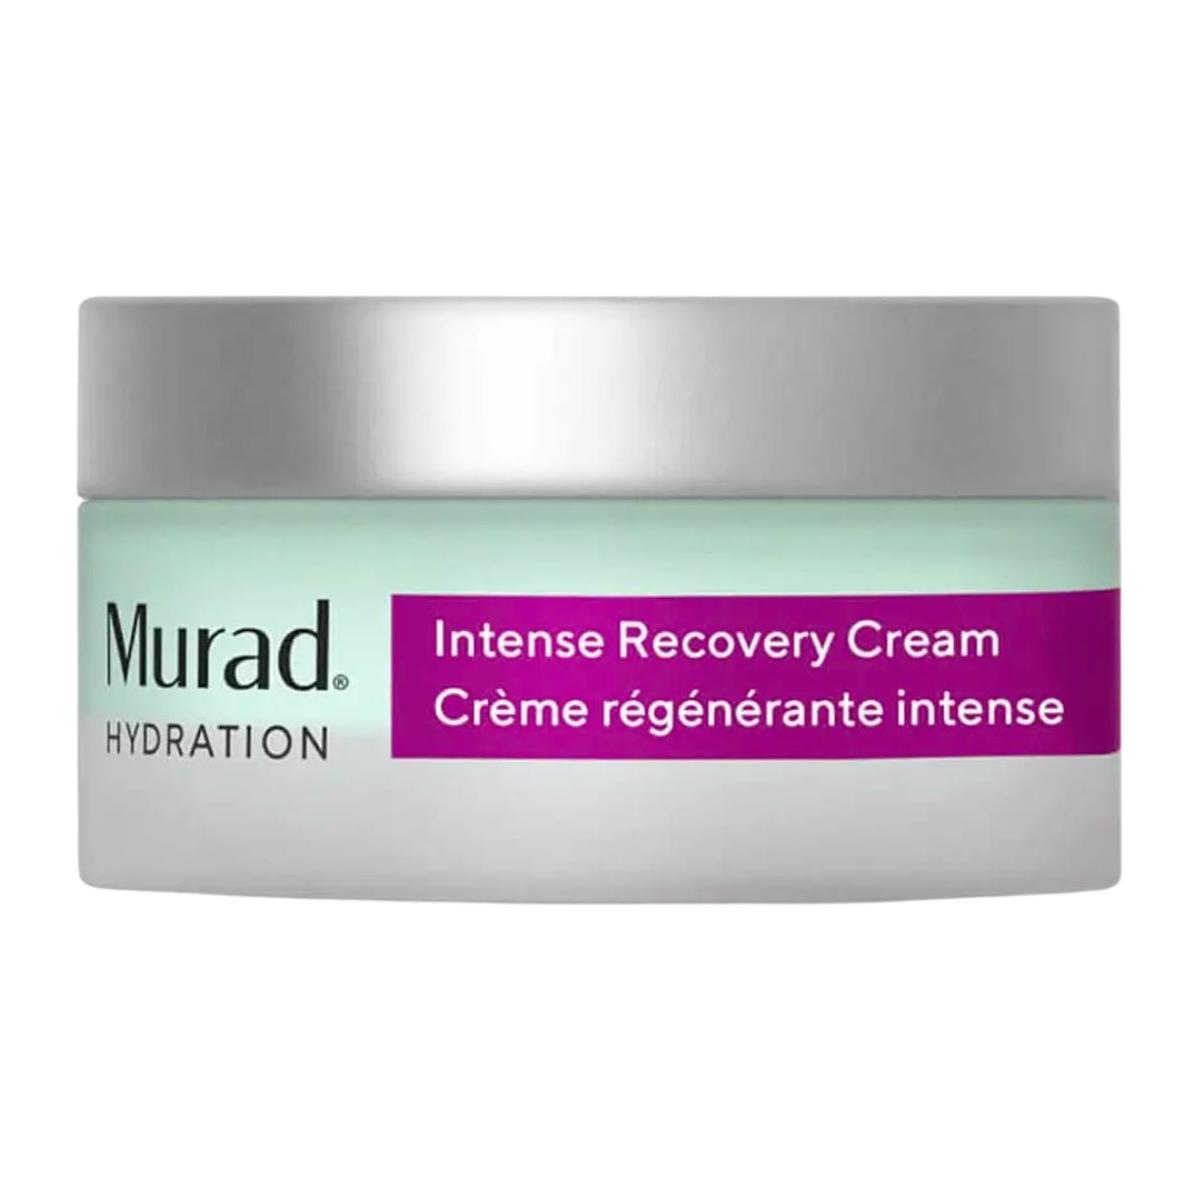 Murad | Intense Recovery Cream | 50ml - DG International Ventures Limited